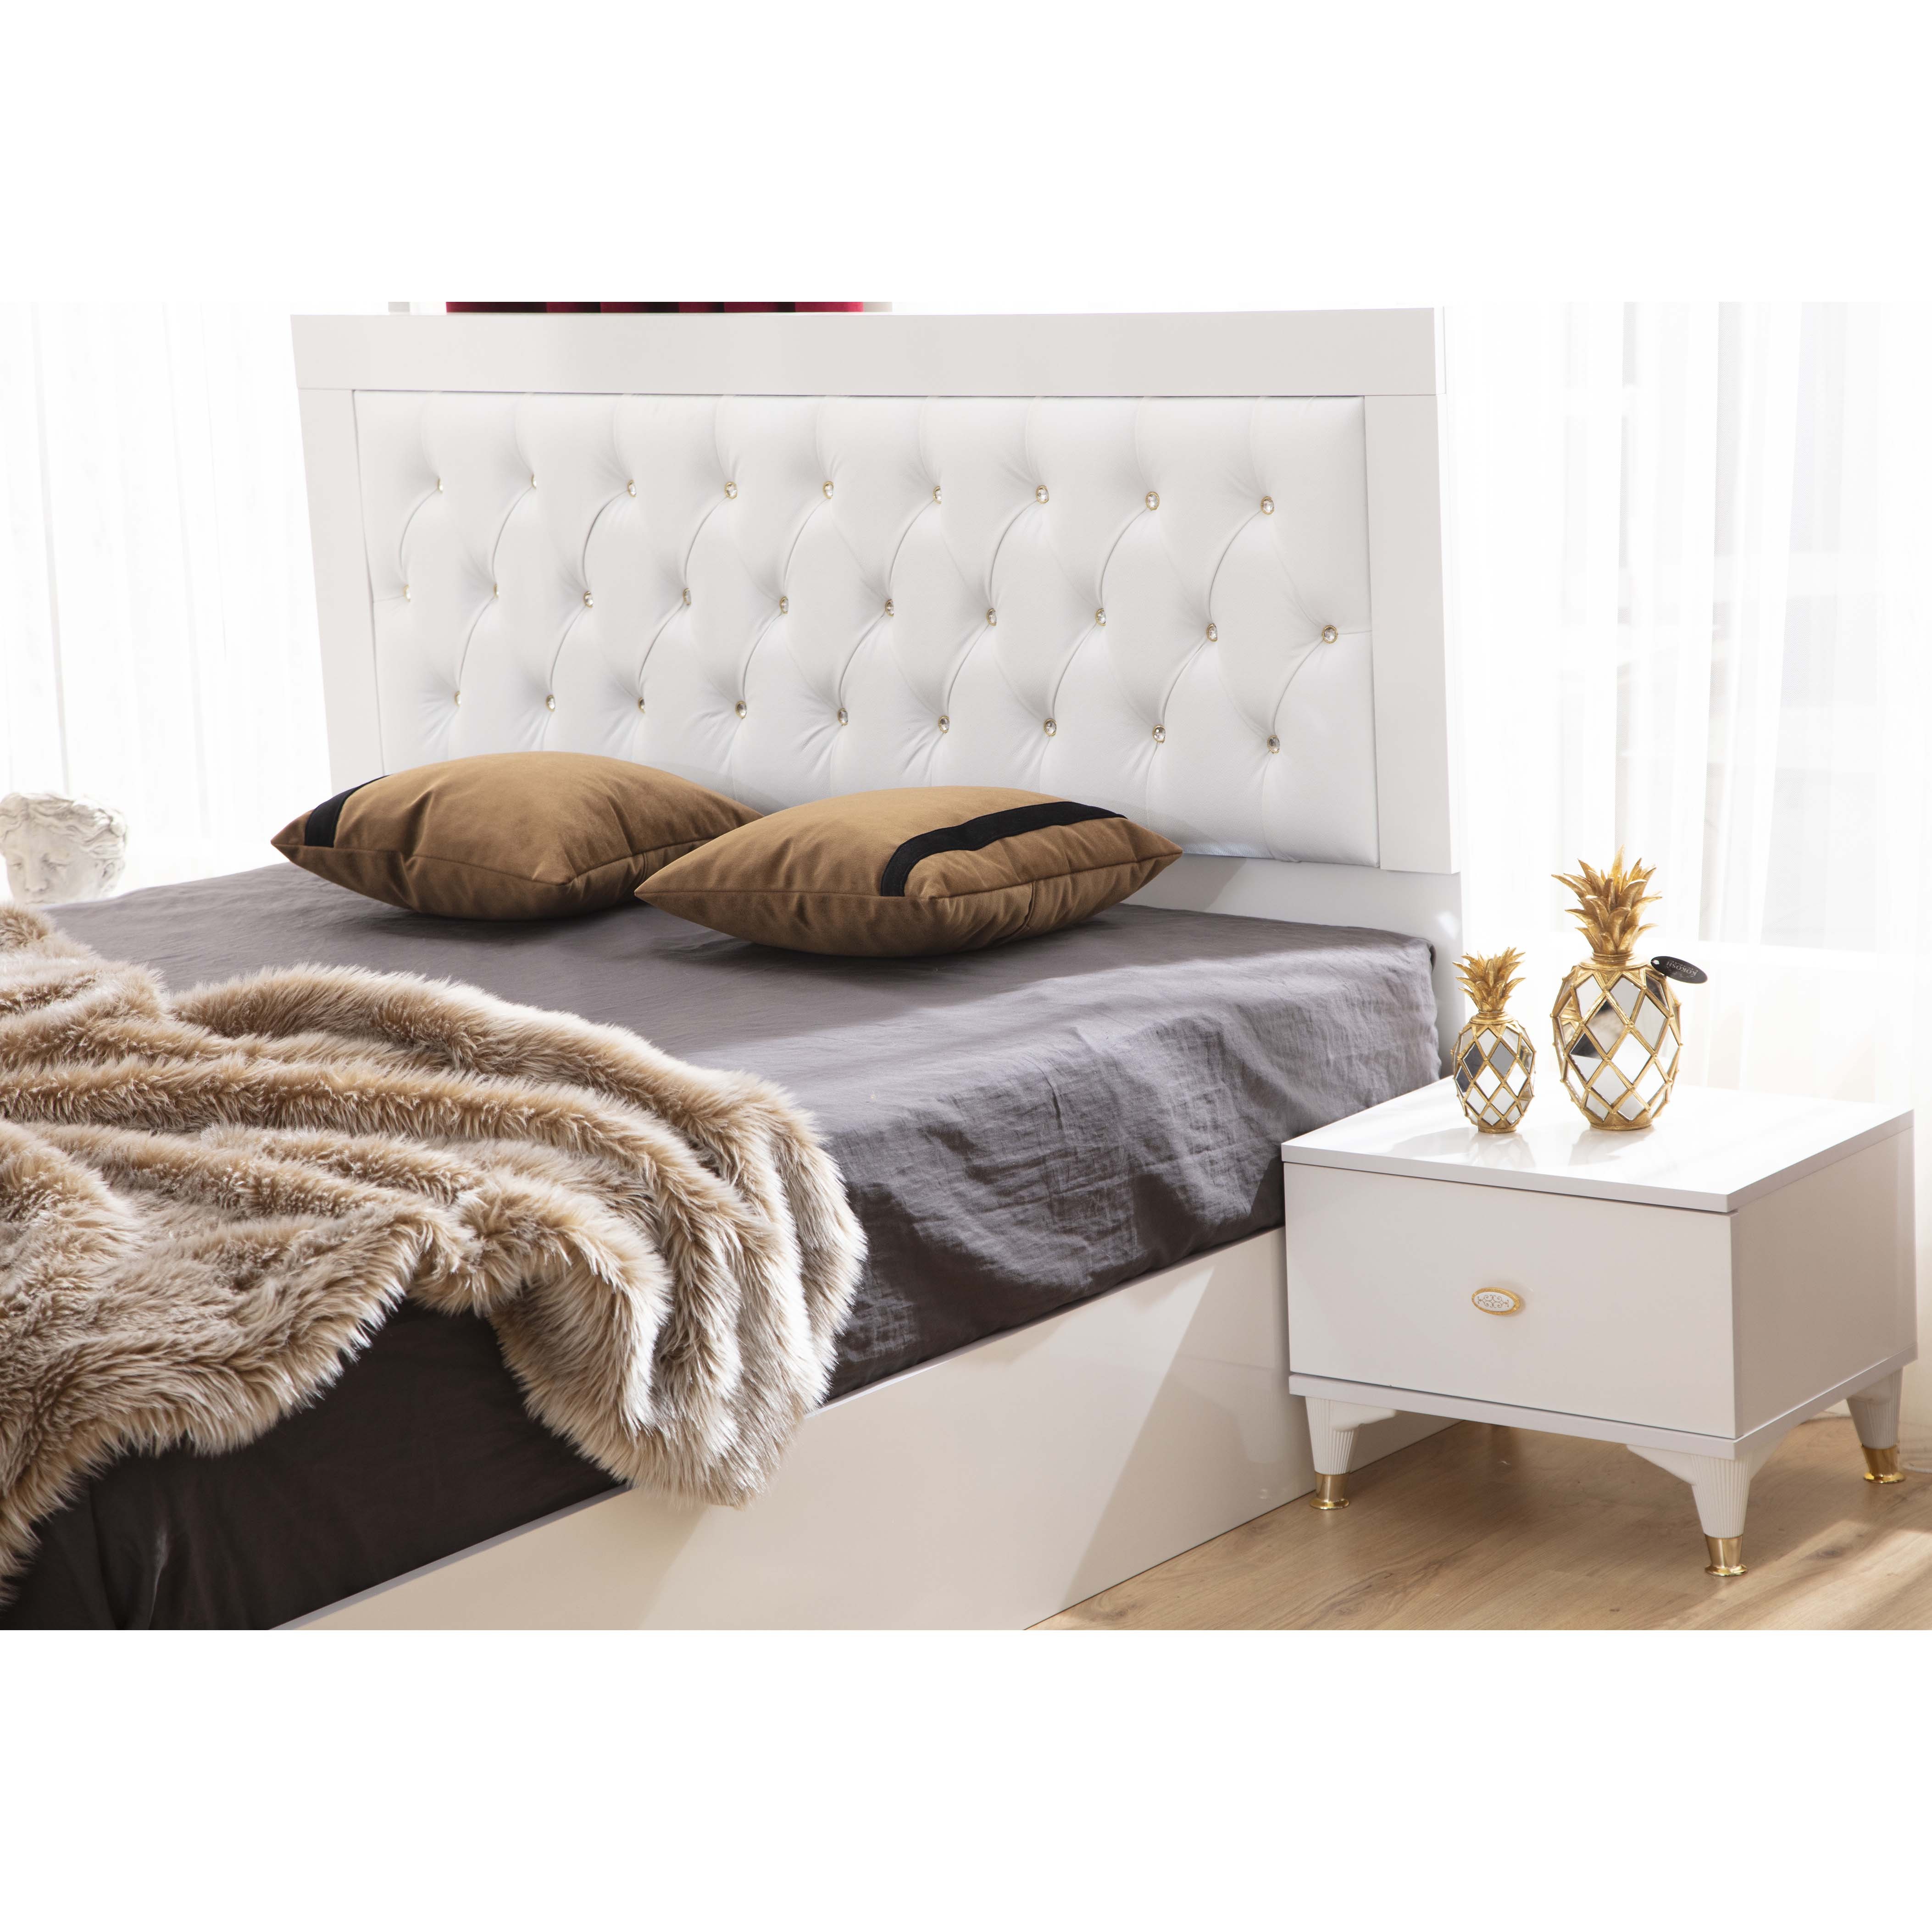 Madrid Bed With Storage 180x200 cm